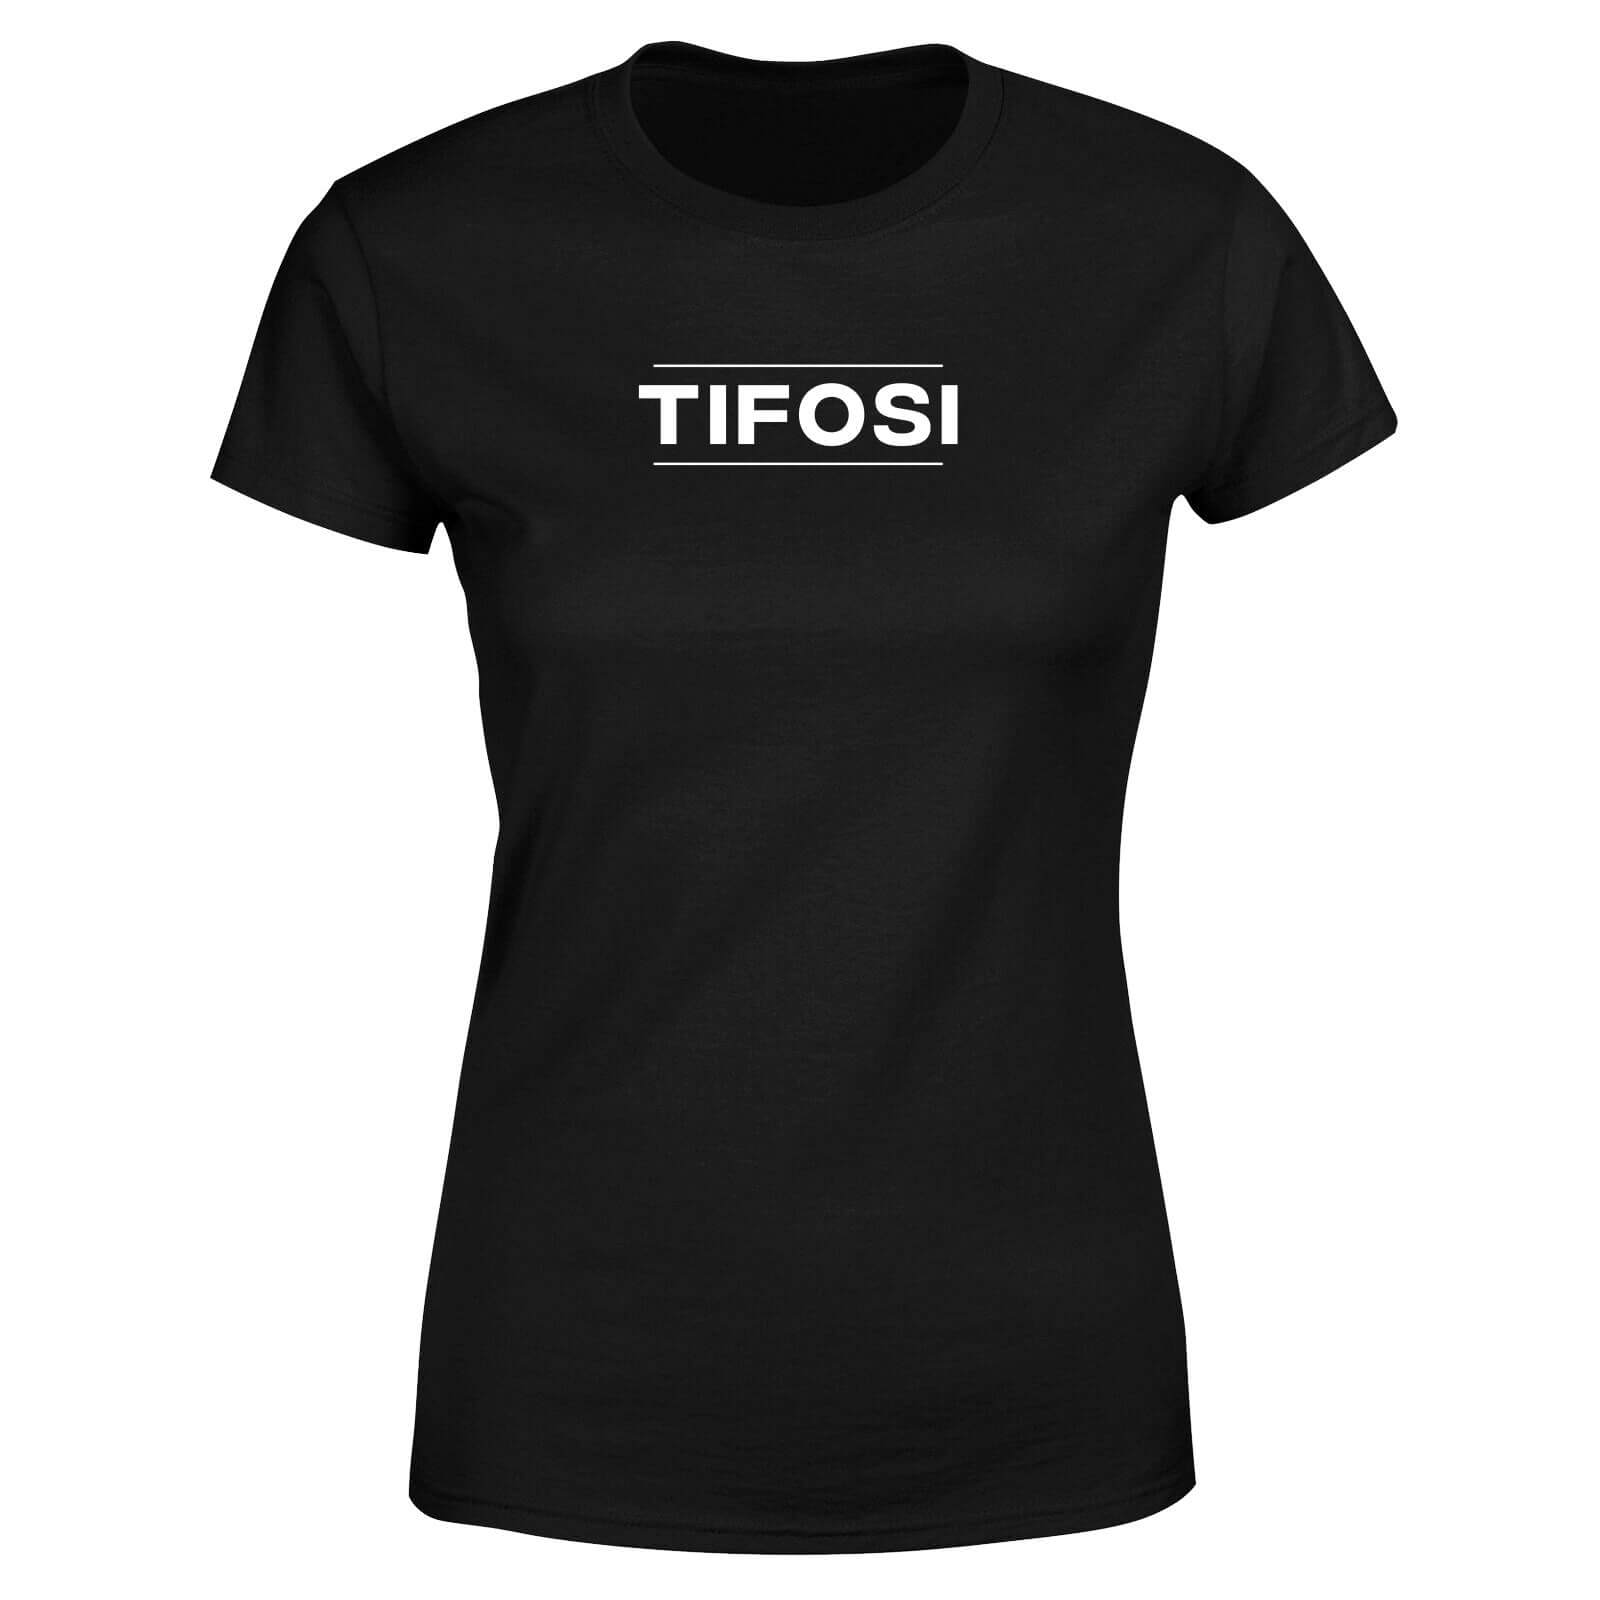 Tifosi Women's T-Shirt - Black - M - Black